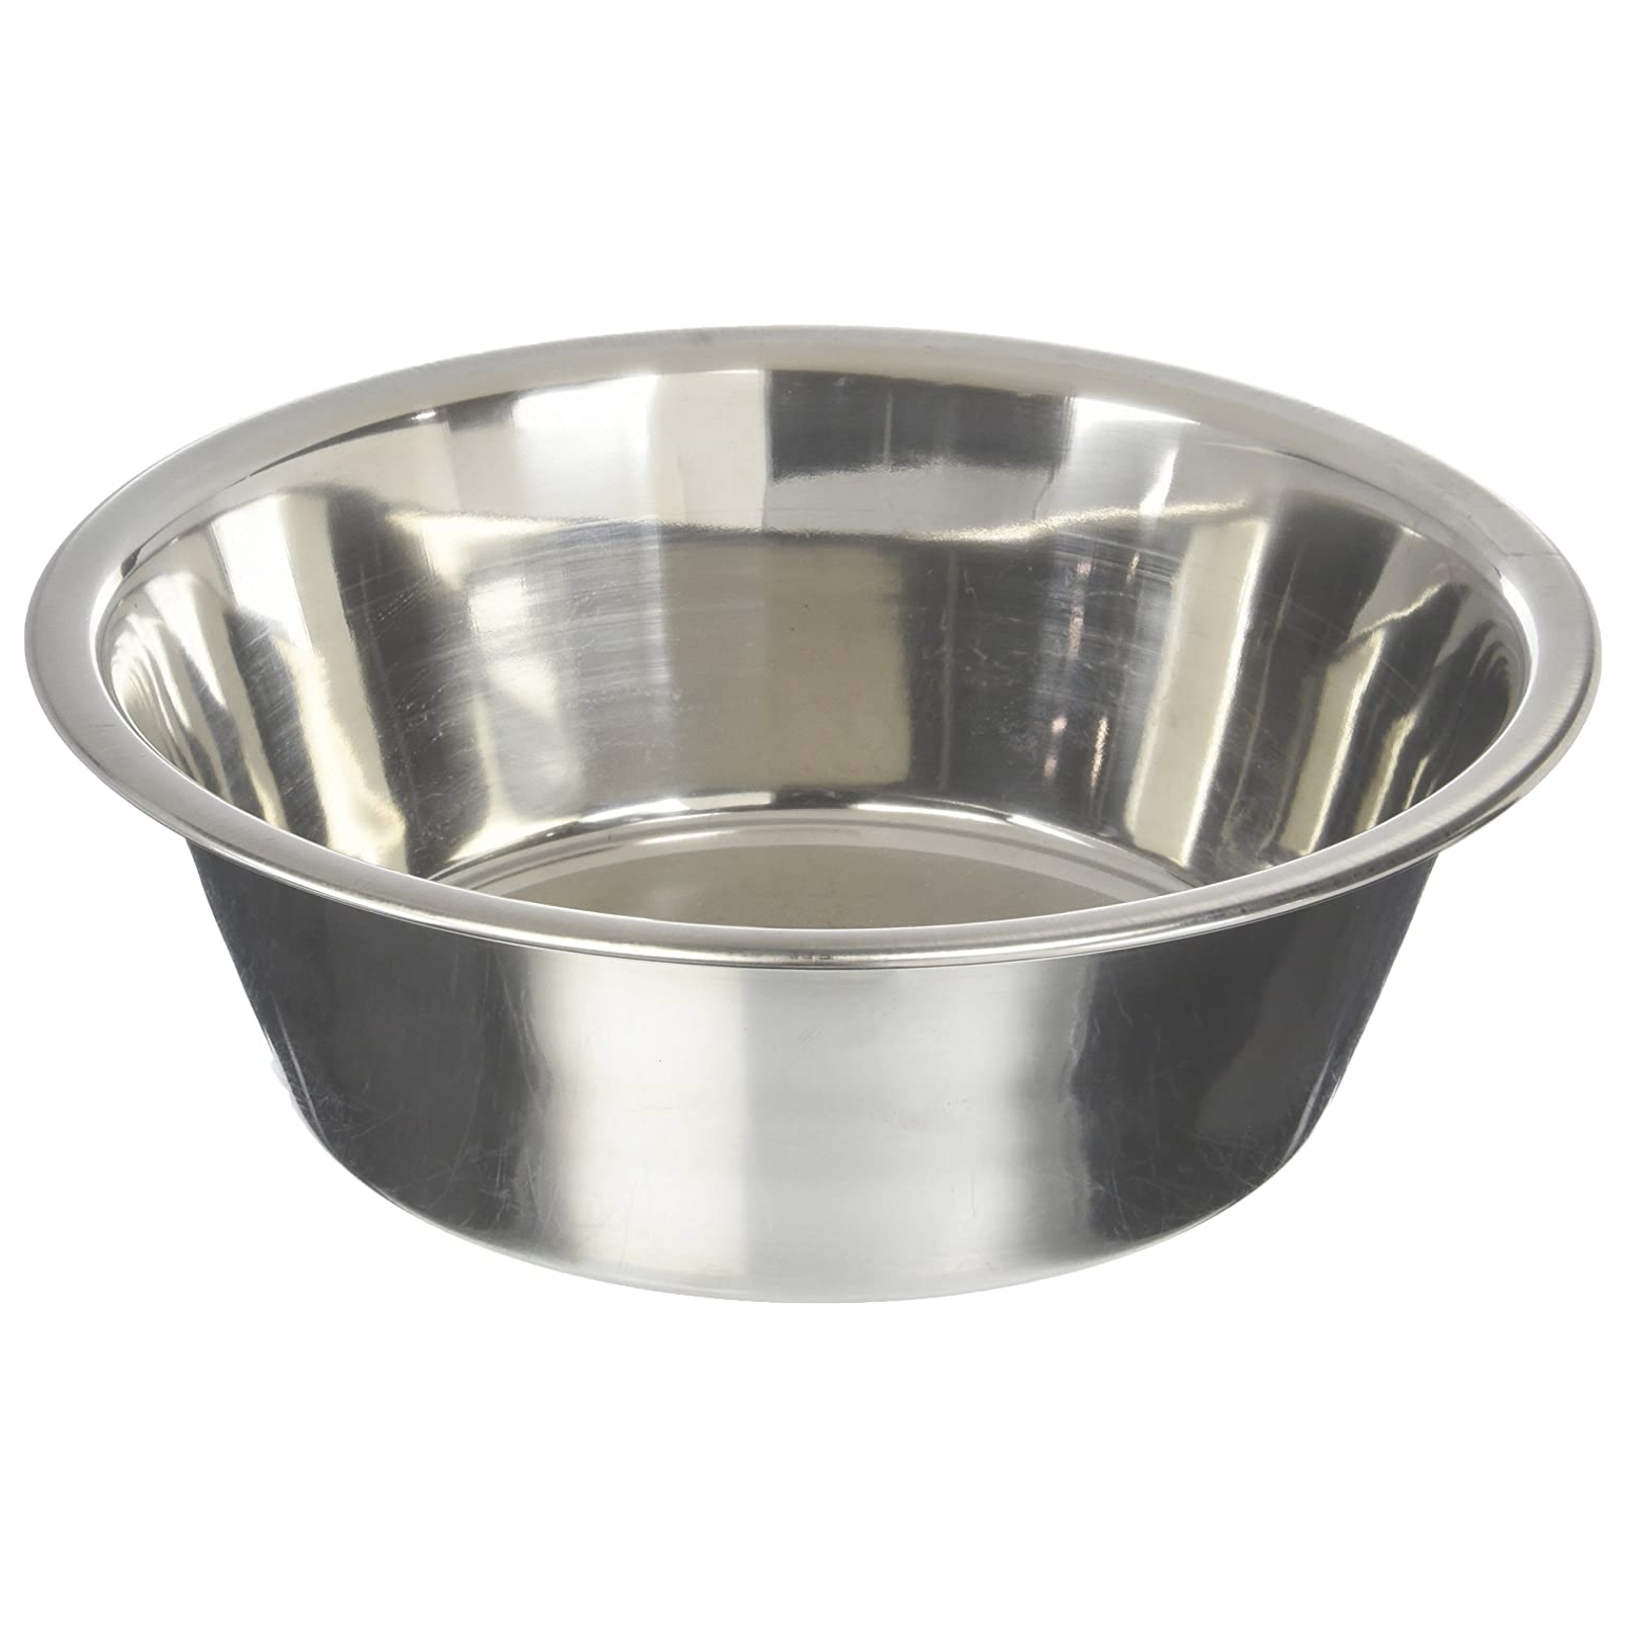 Stainless Steel Water/Food Bowl